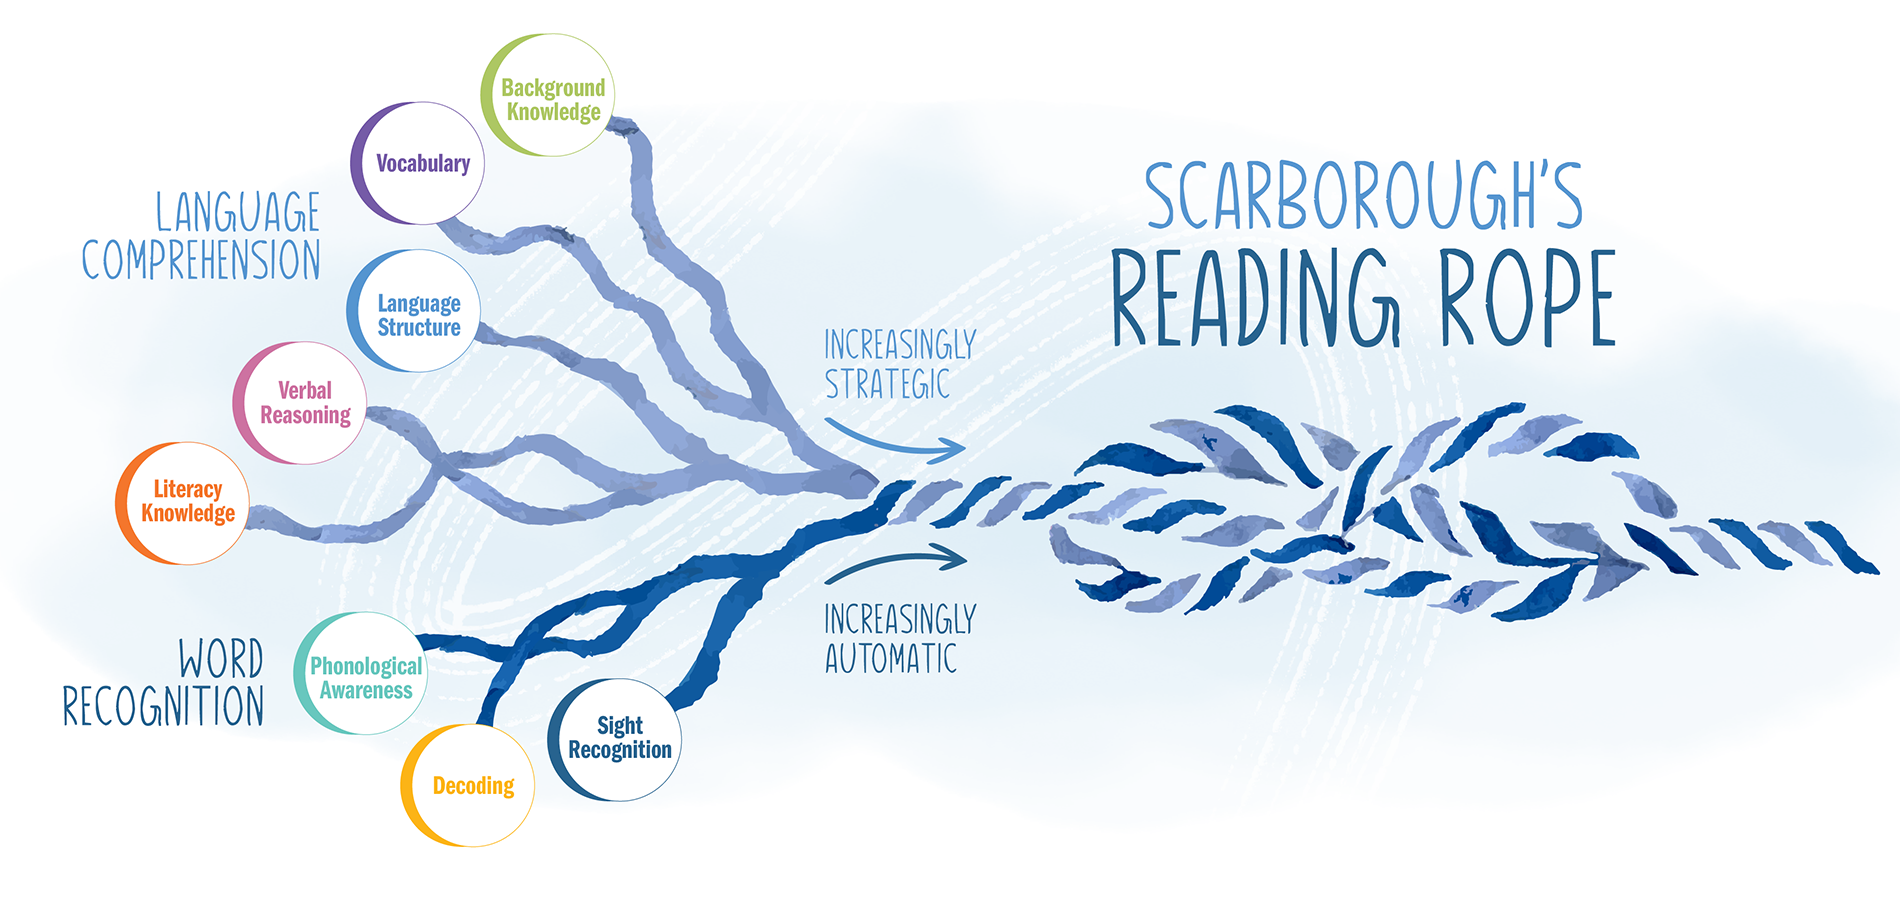 Scarborough's Reading Rope image